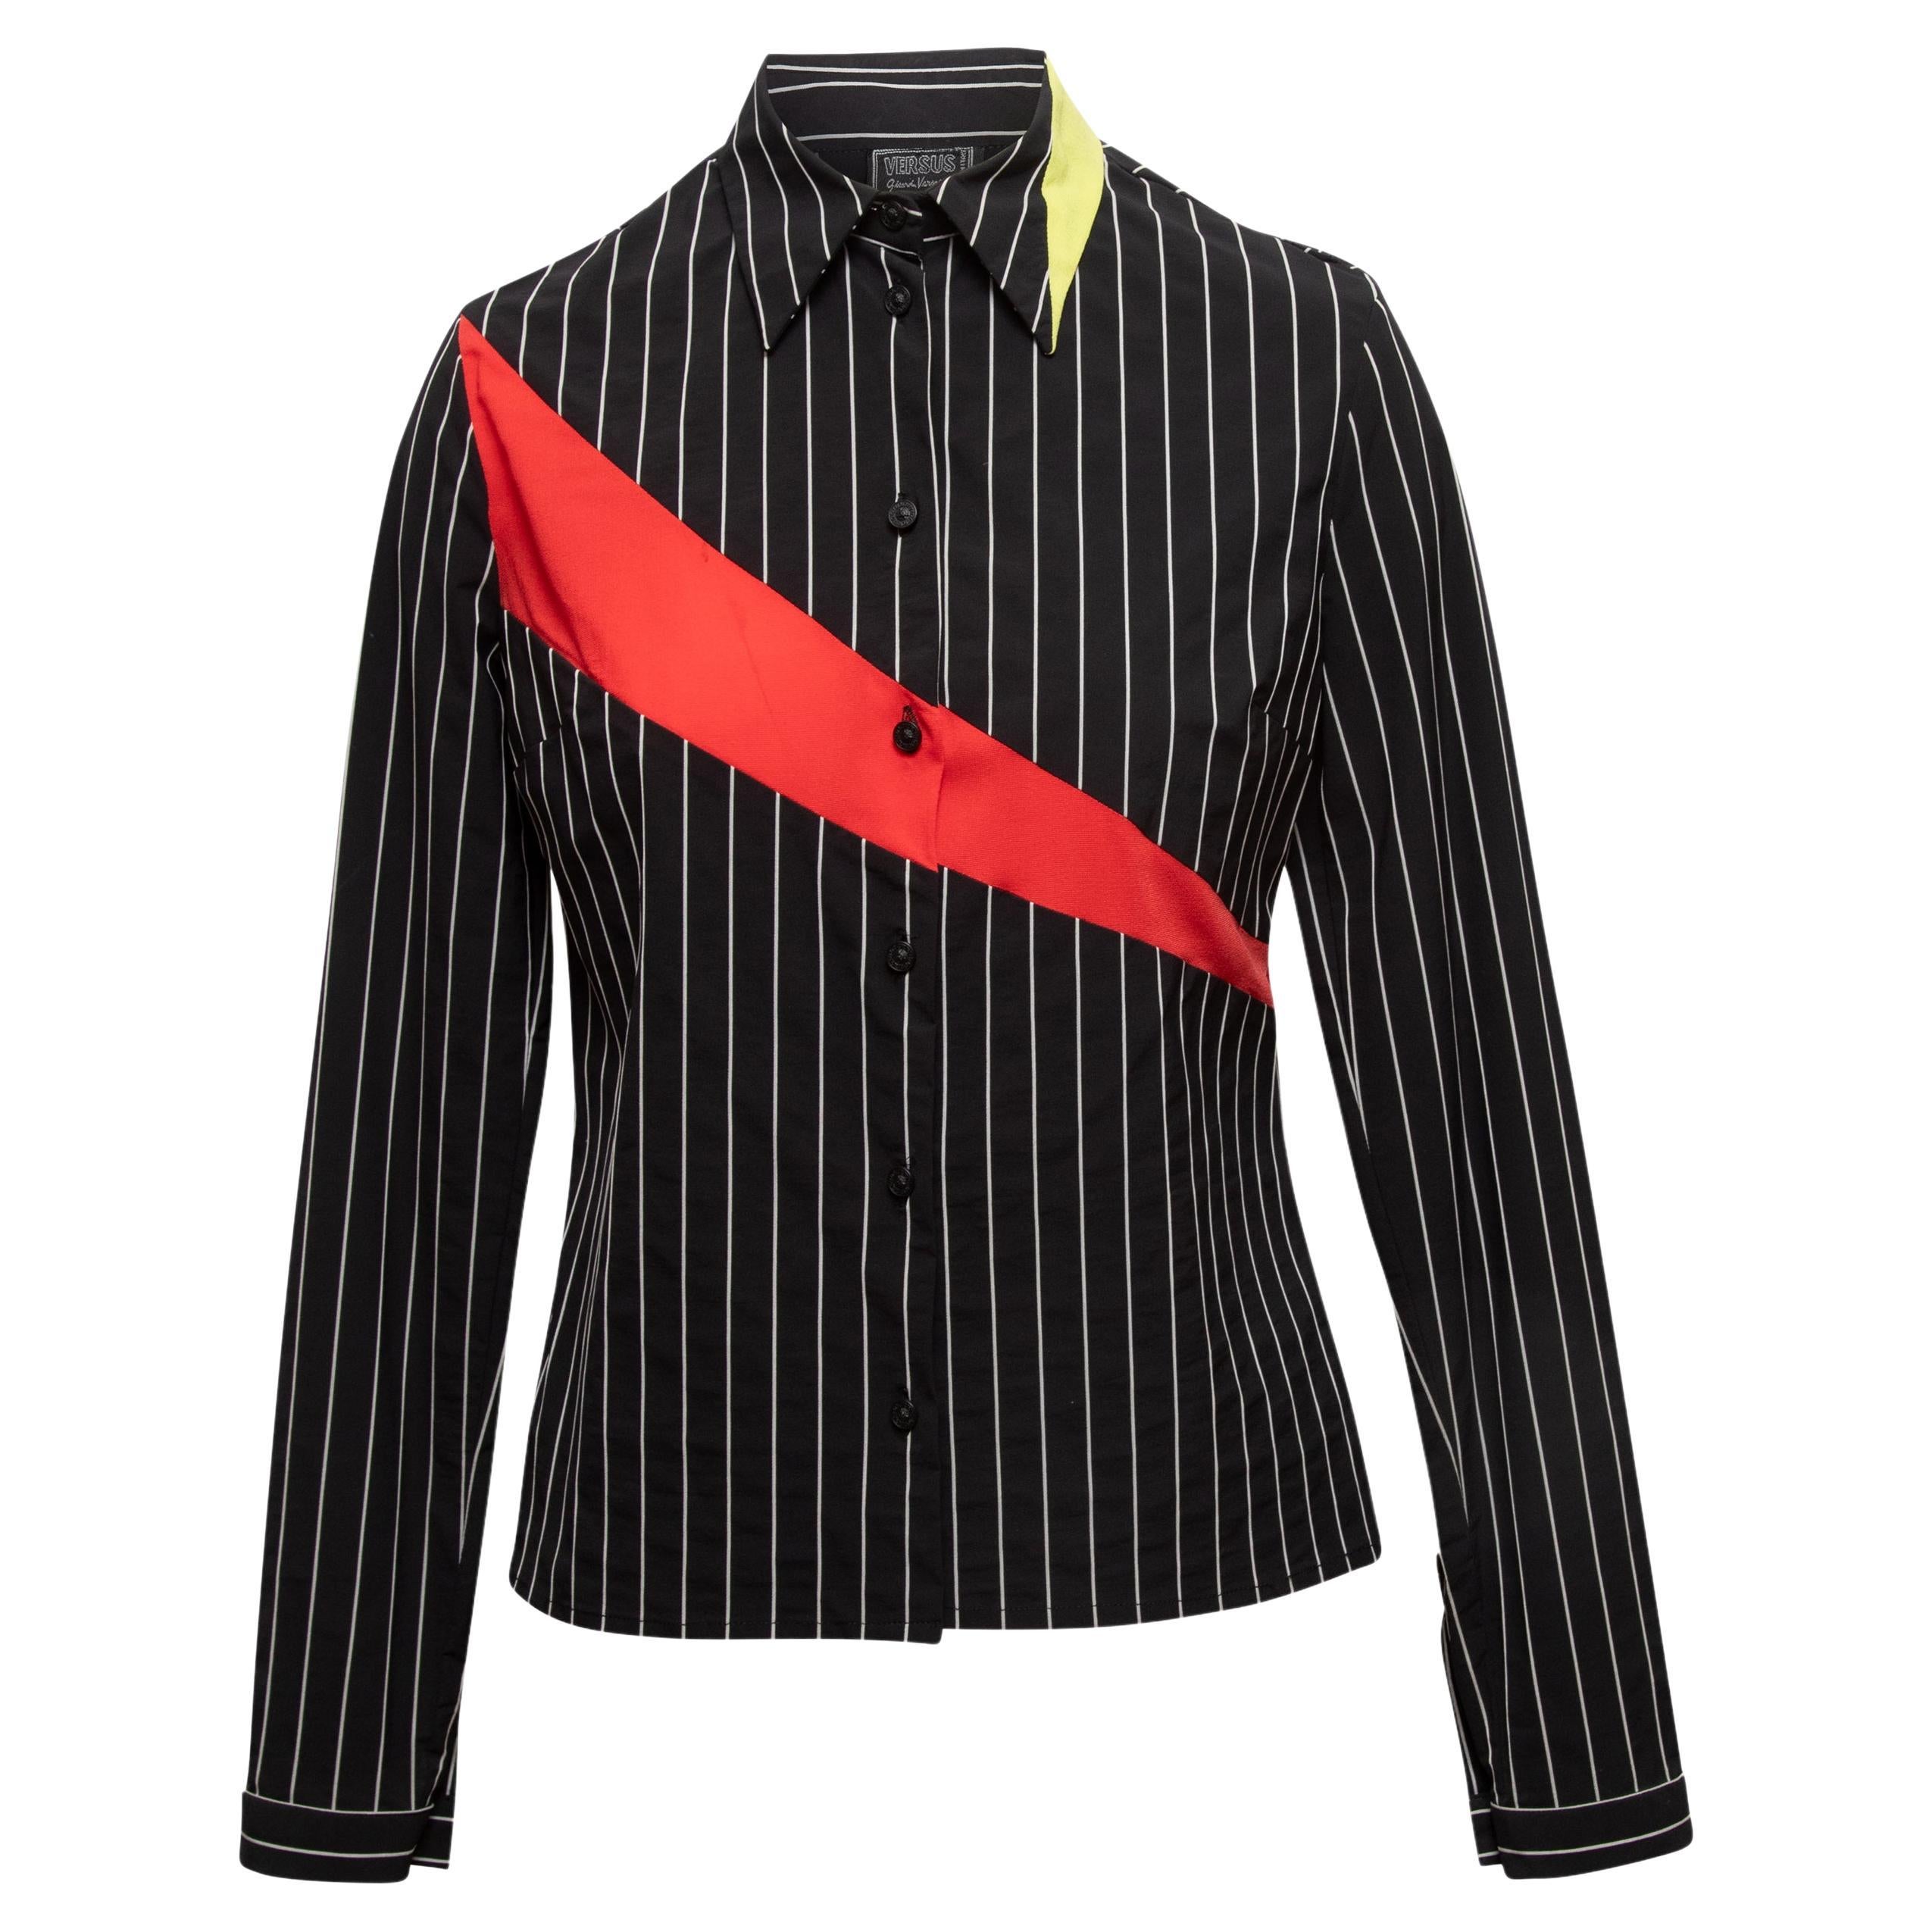 Black & Multicolor Versus Gianni Versace Striped Button-Up Top